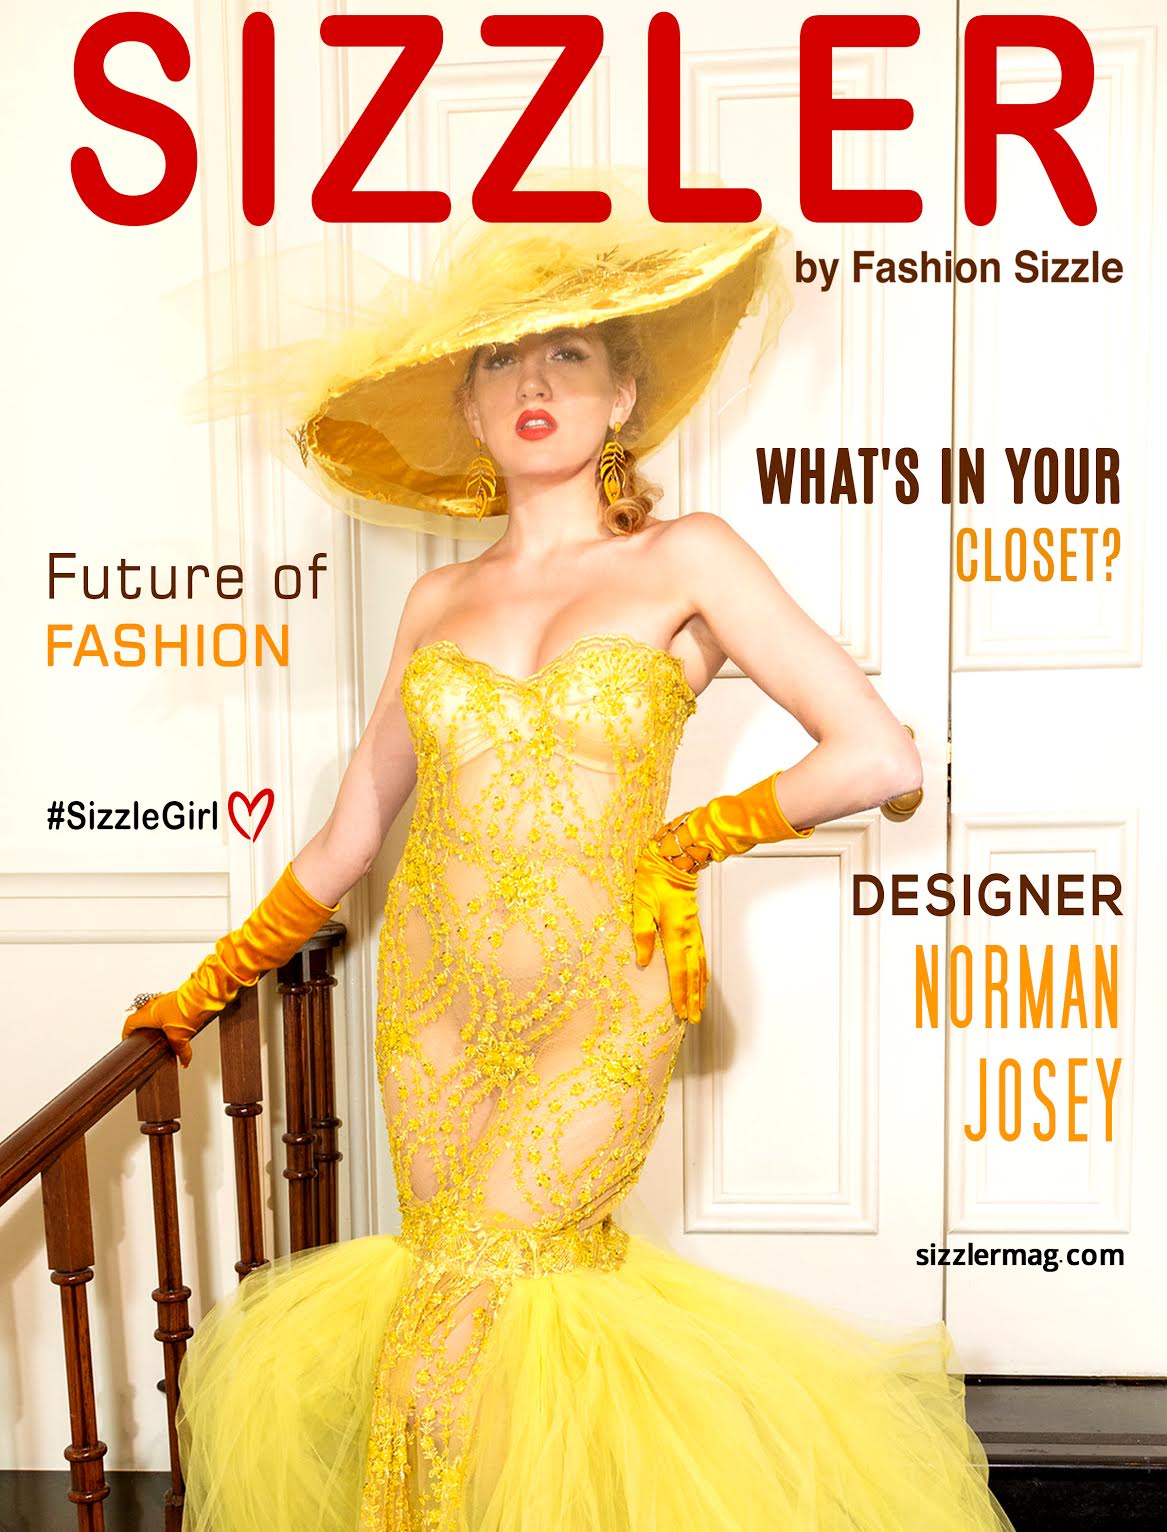 sizzler-magazine-features-designer-norman-josey-of-lockdown-international-design